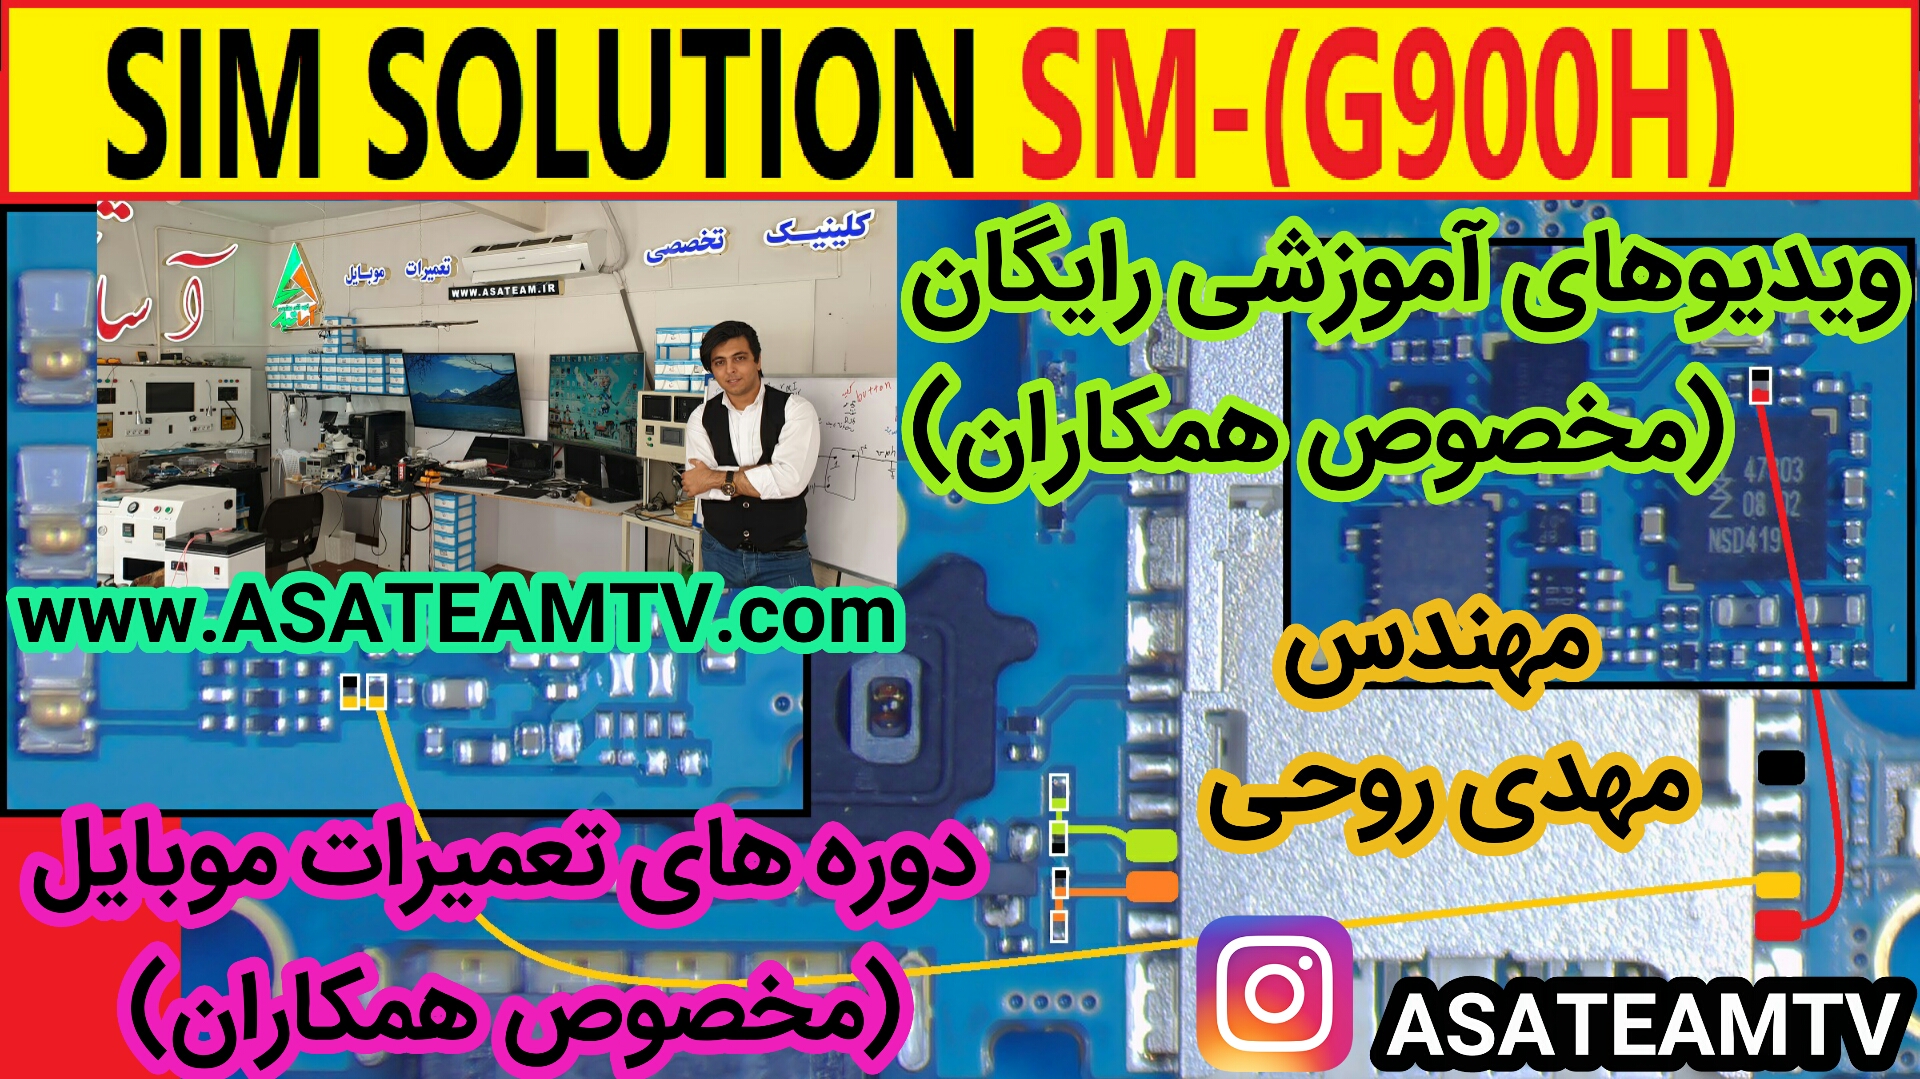 SIM SOLUTION G900H